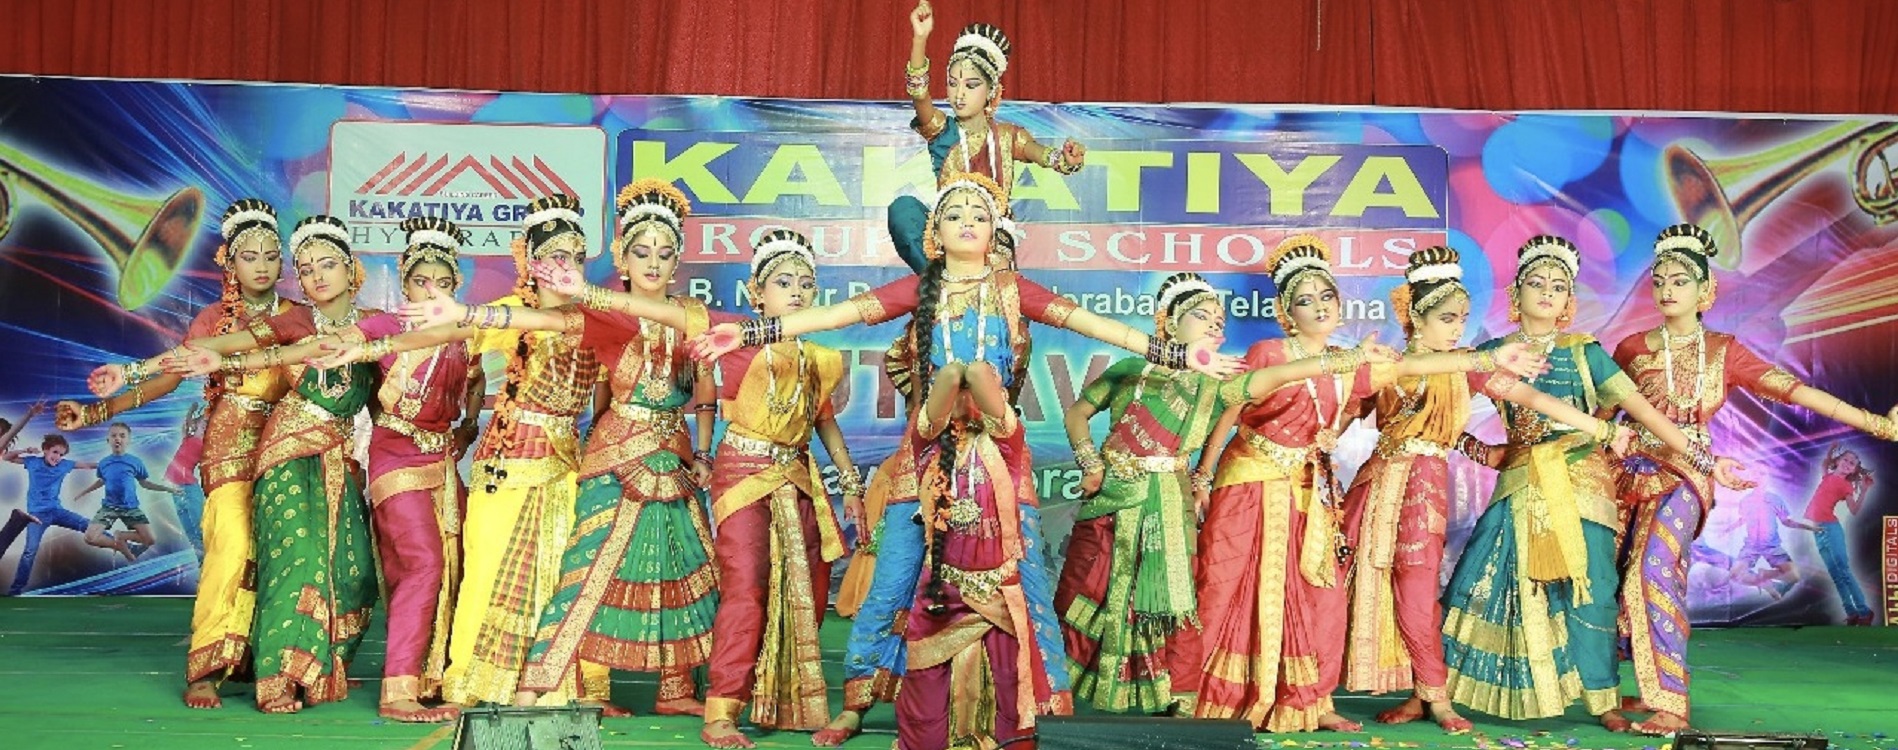 Kakatiya-banner